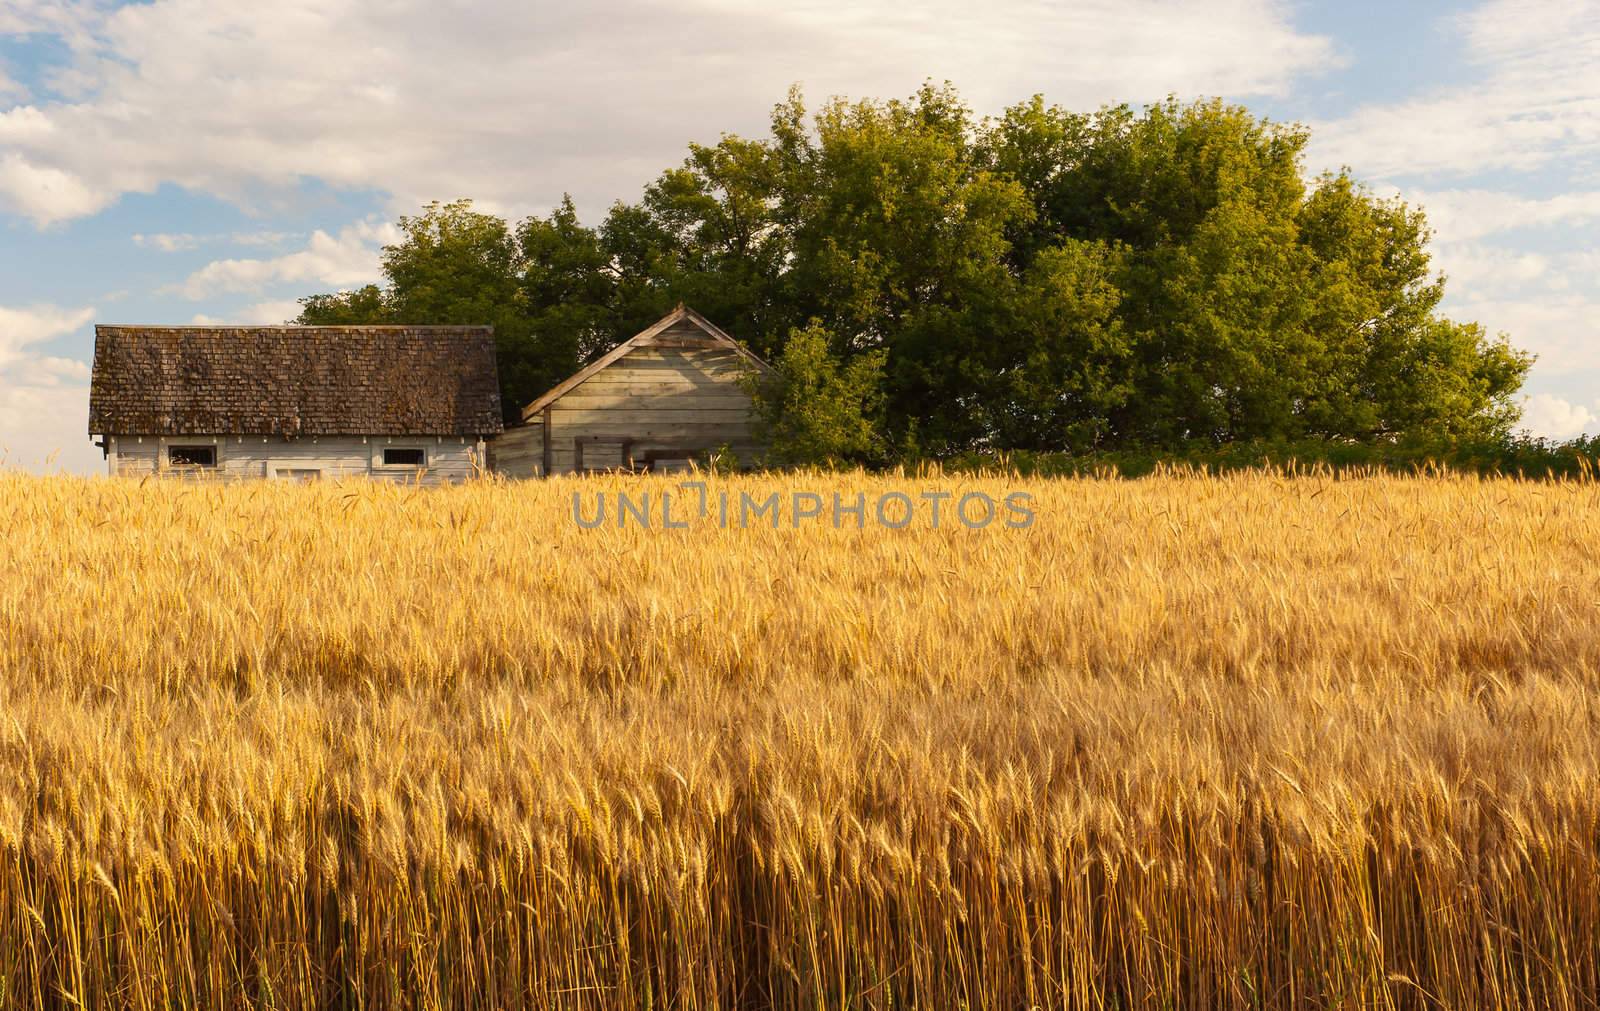 Abandoned sheds and wheat field, Whitman County, Washington, USA